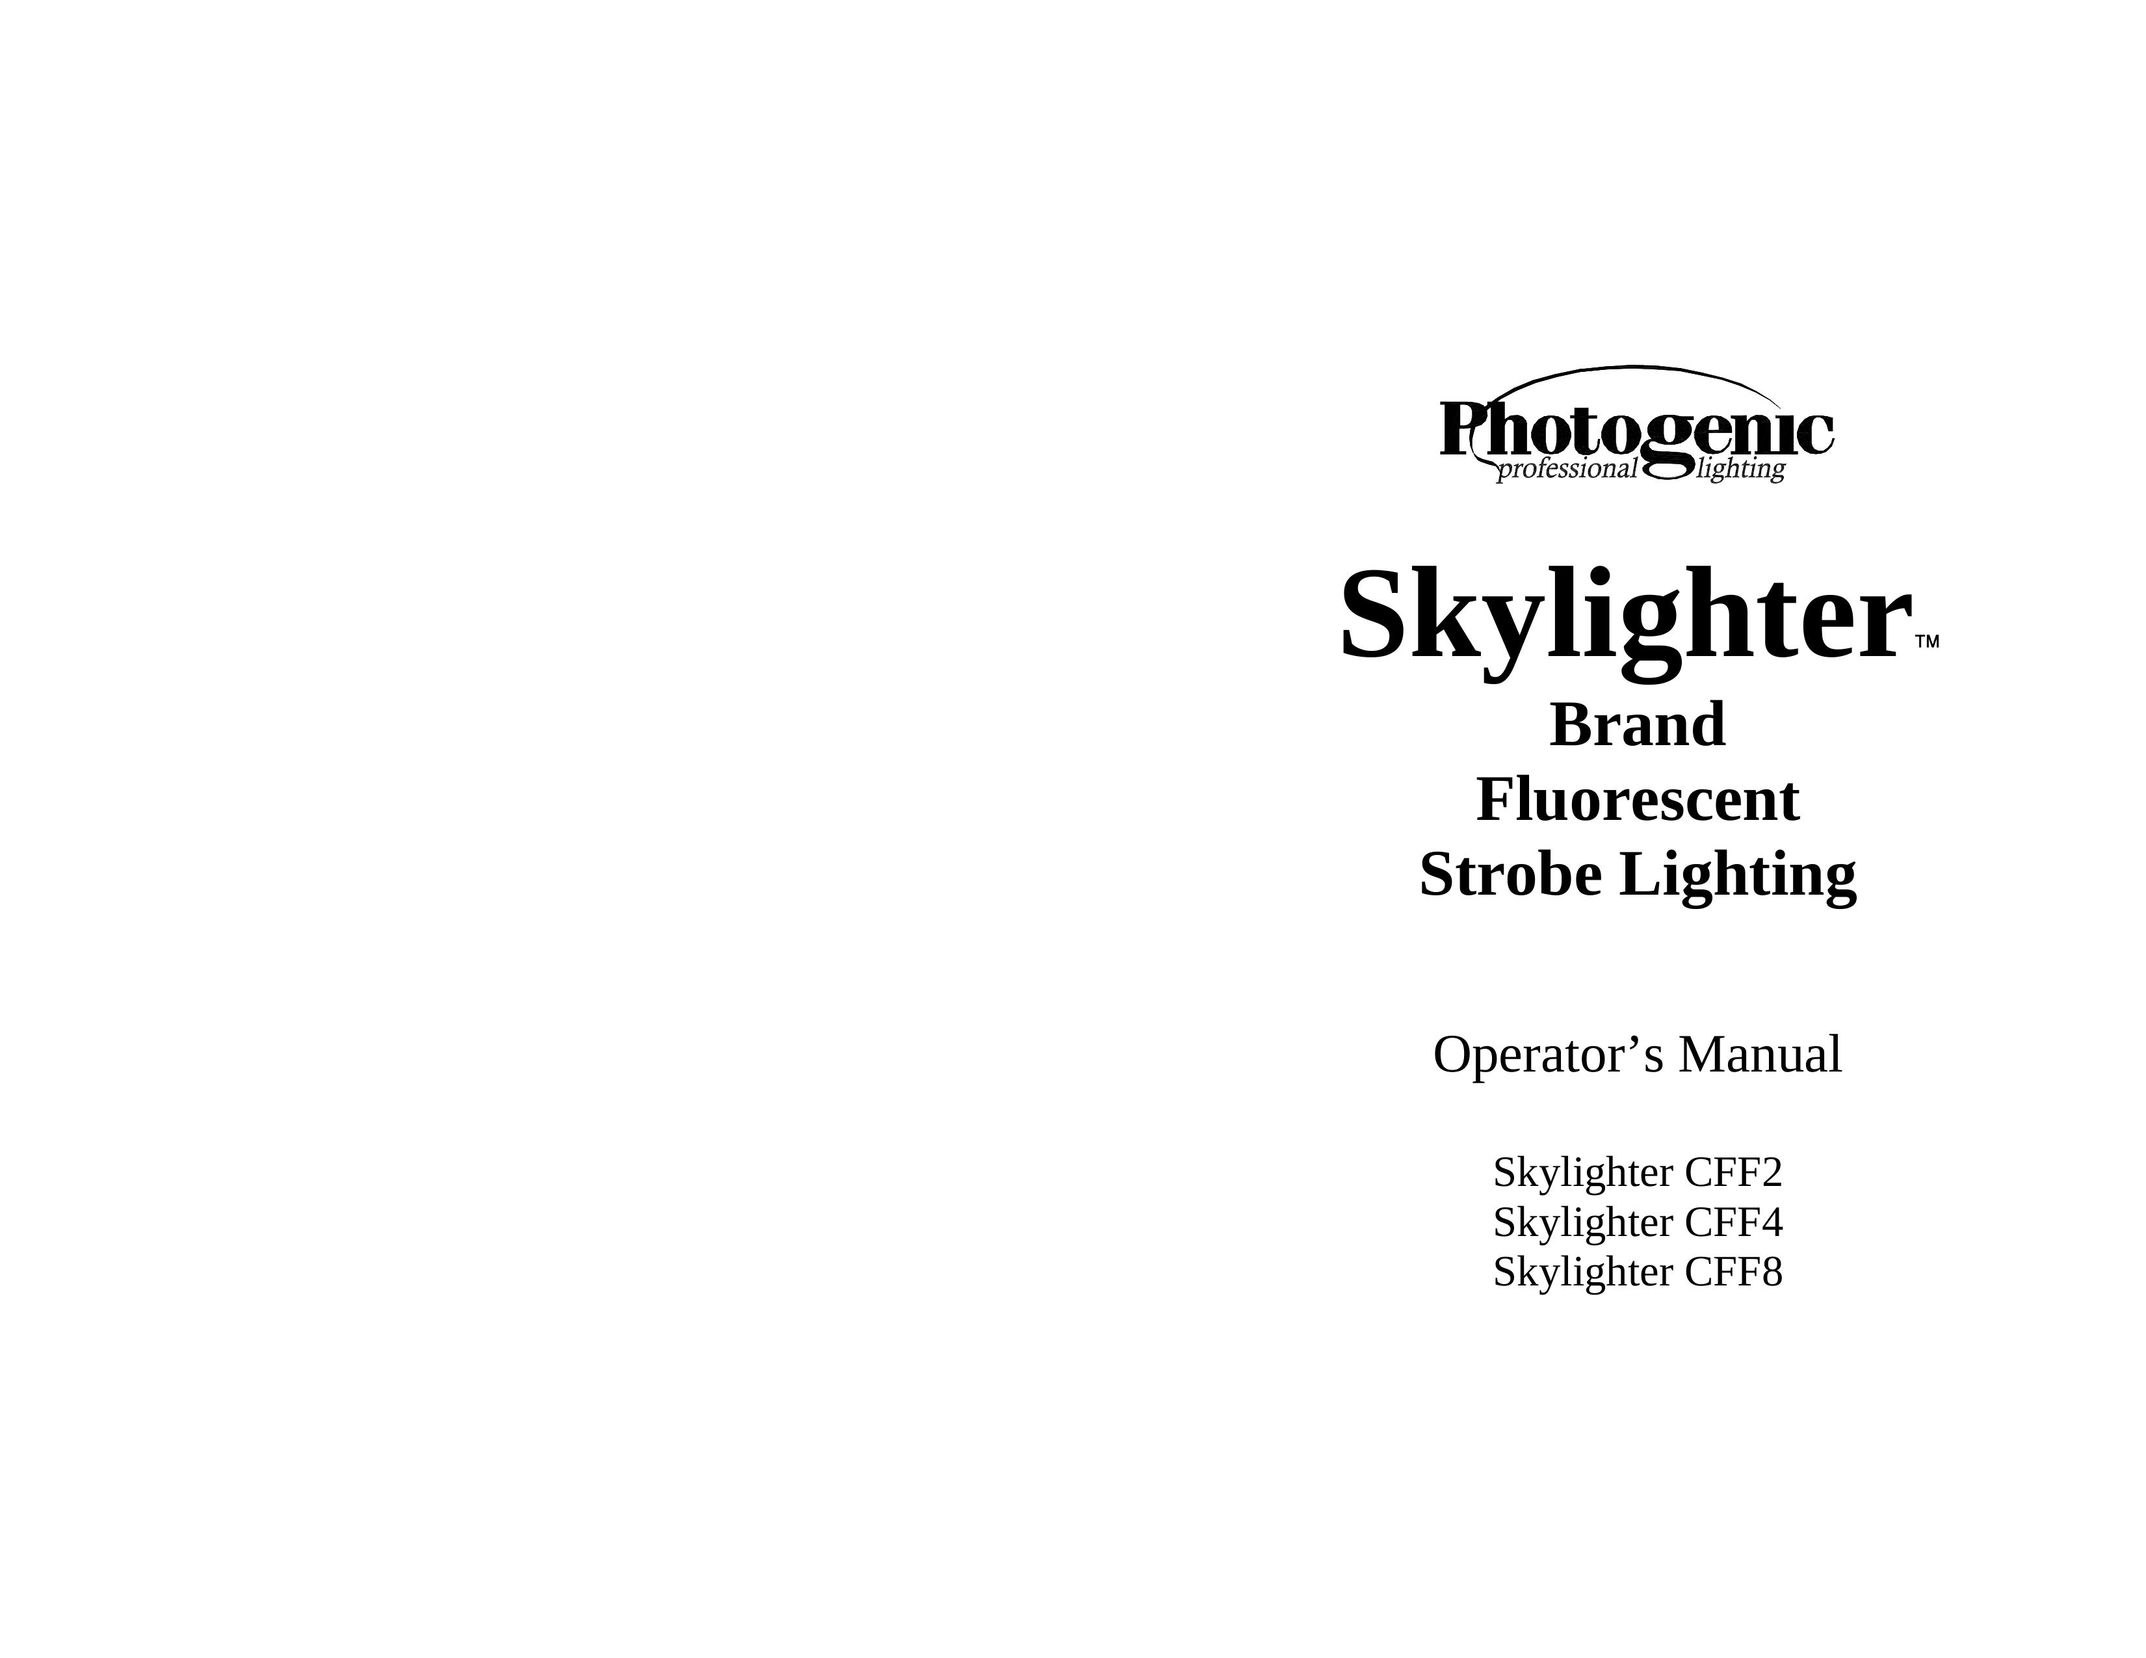 Photogenic Professional Lighting CFF2 Power Supply User Manual